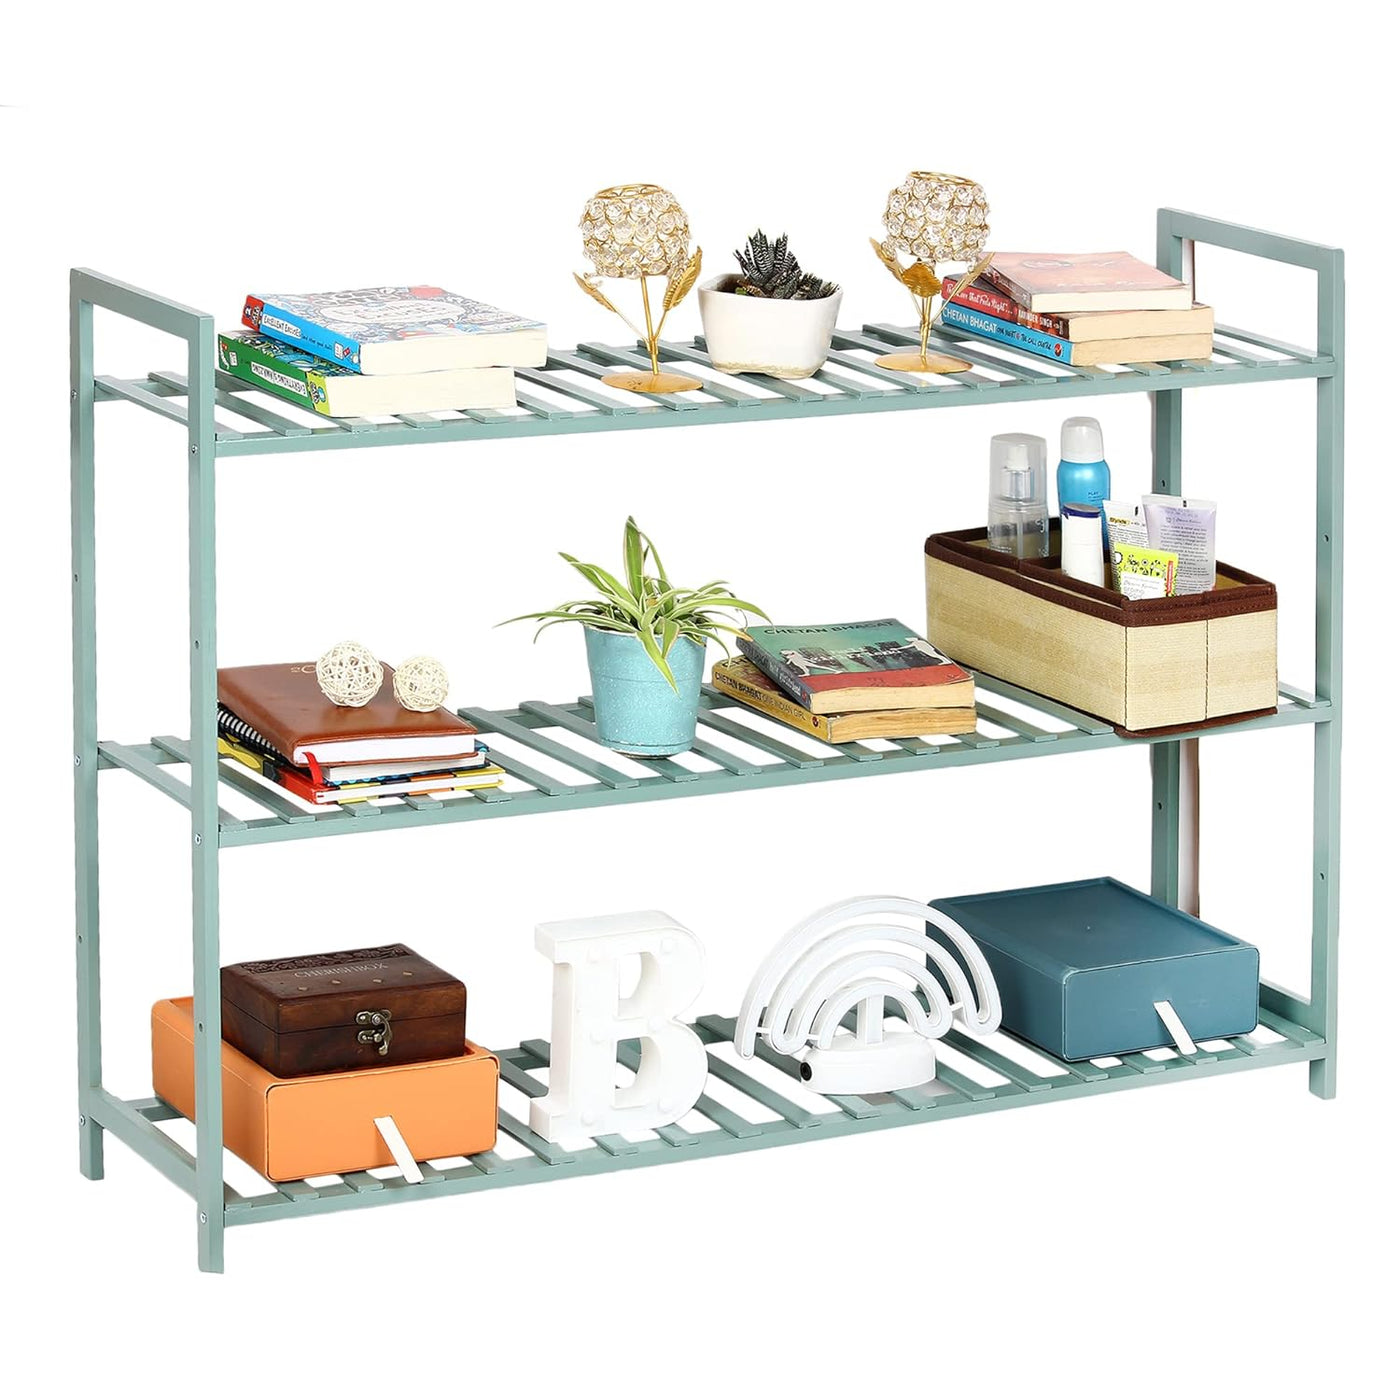 3 Tier Adjustable Bookshelf, Bamboo Bookcase Shelf Storage Organizer (Green, 98x24x70cm)